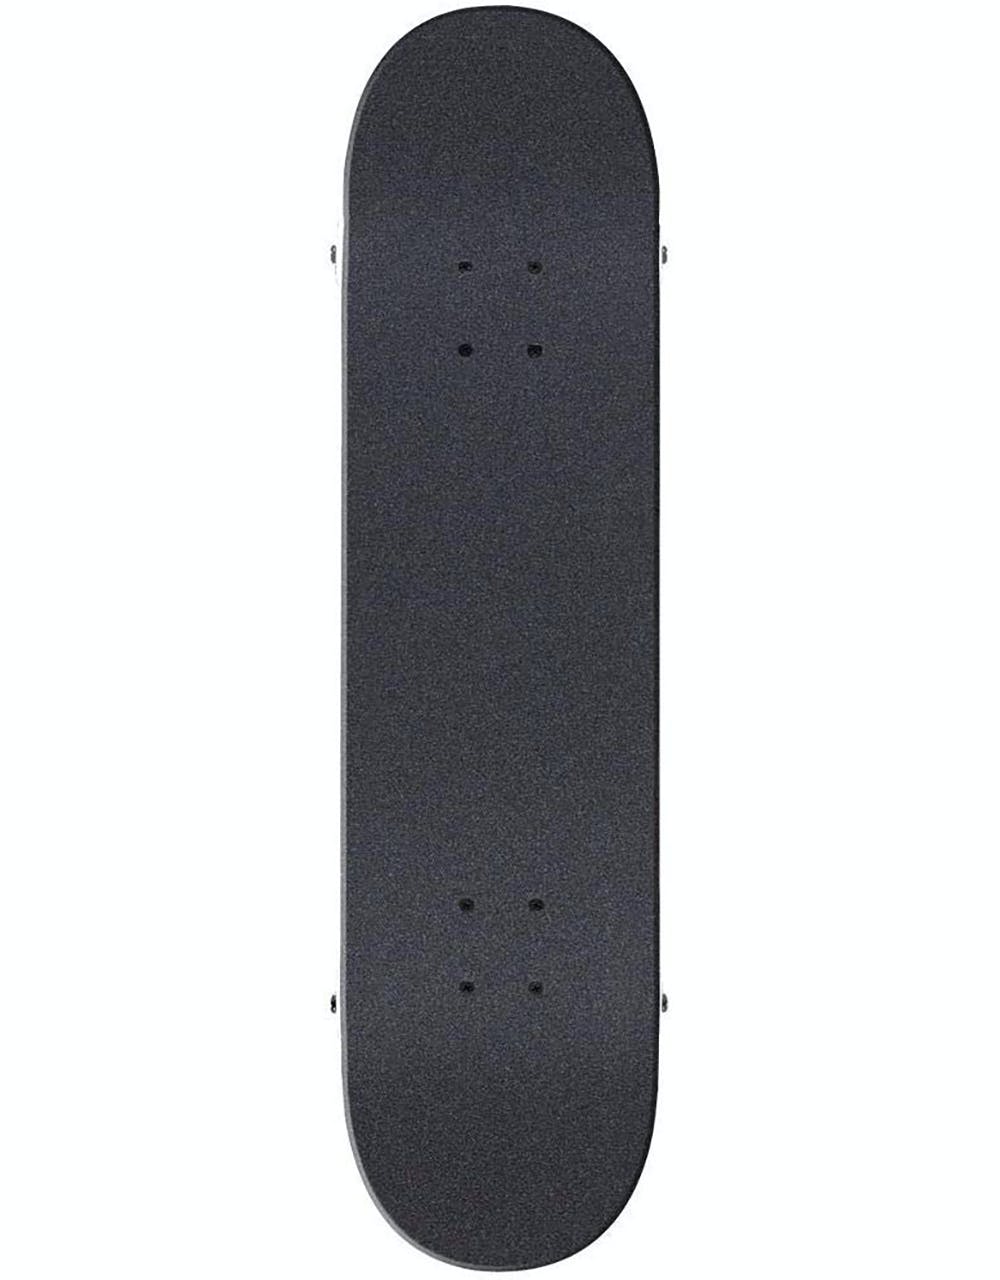 Blueprint Babushka Complete Skateboard - 7.75"